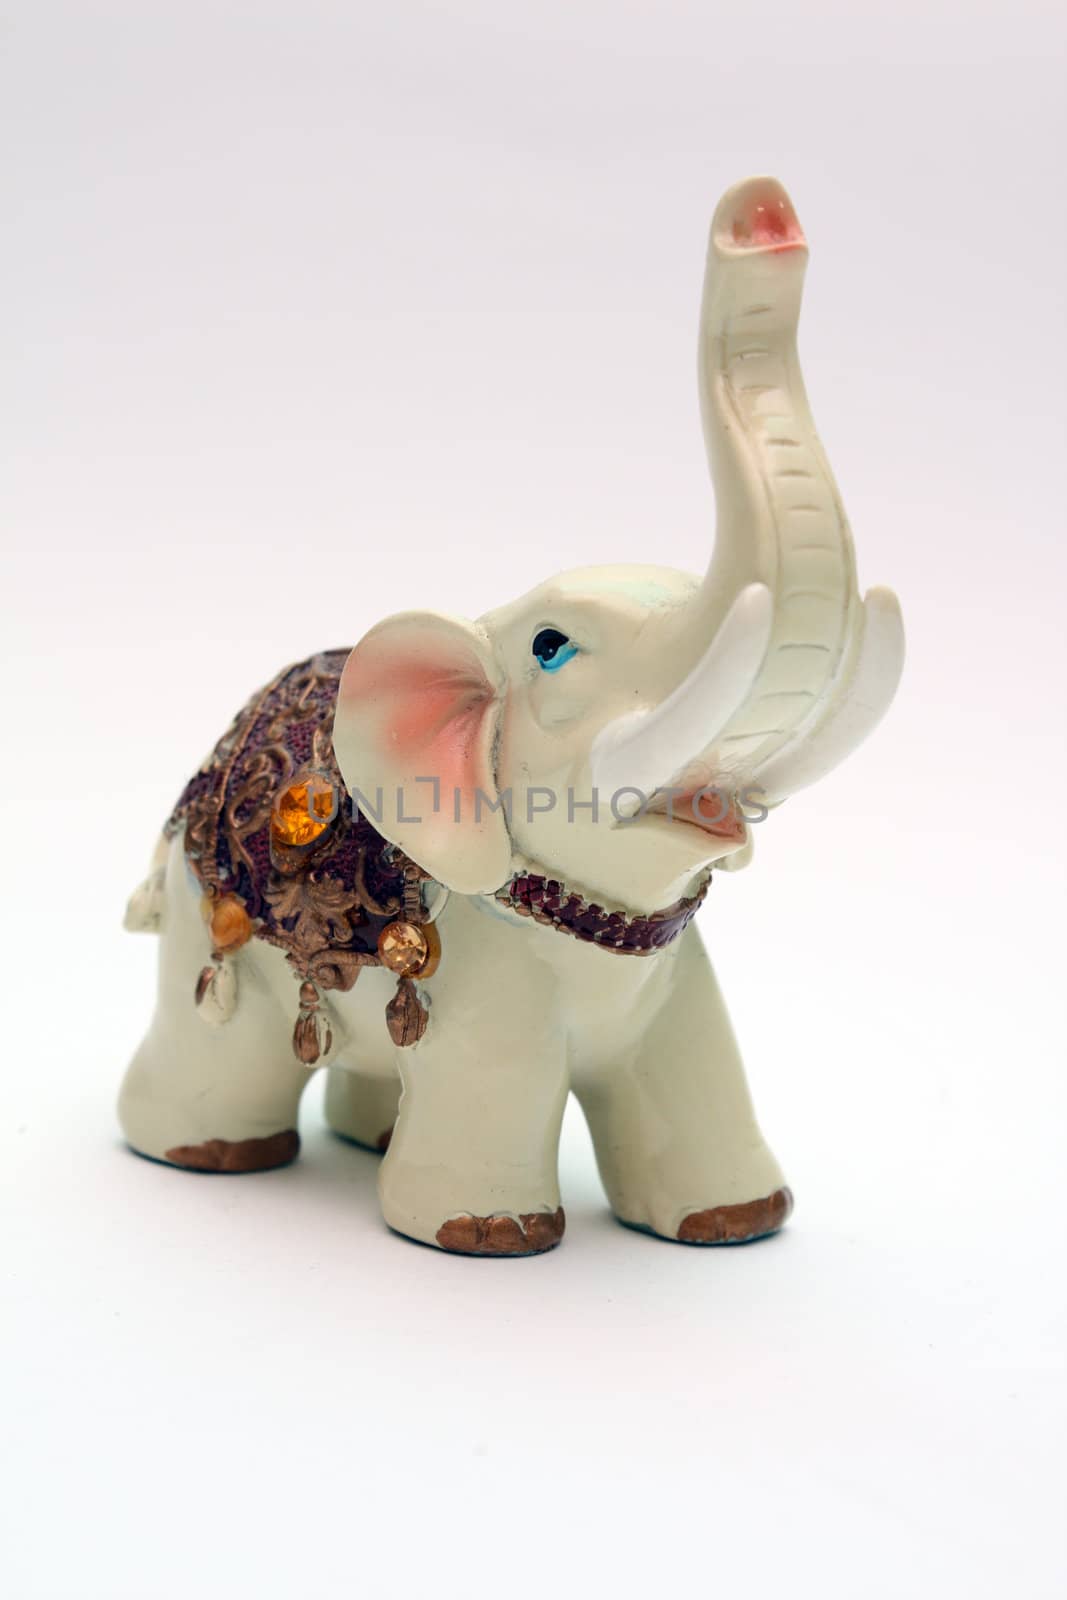 Porcelain elephant by dnkart